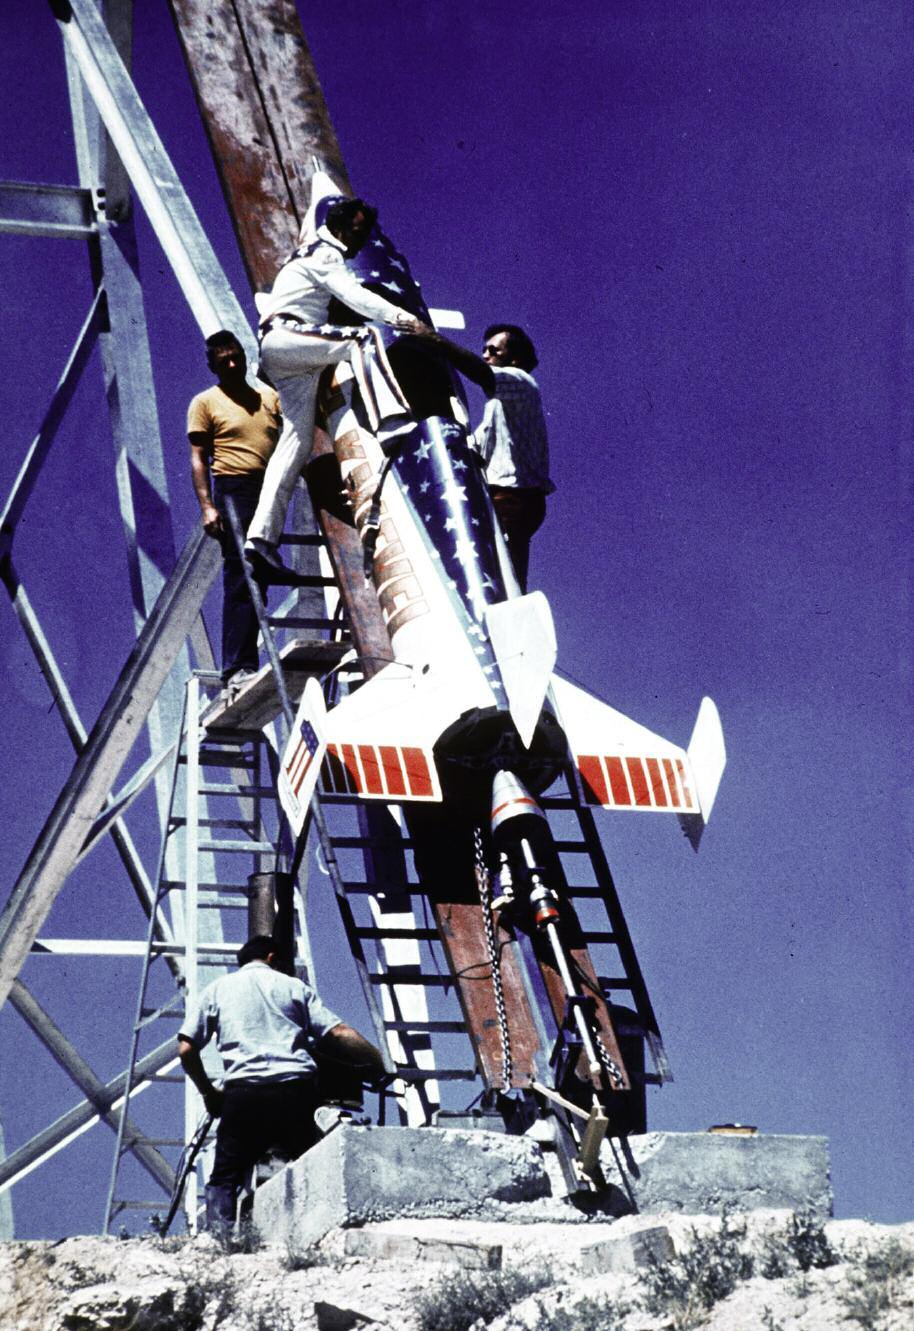 Evel Knievel prepares to jump